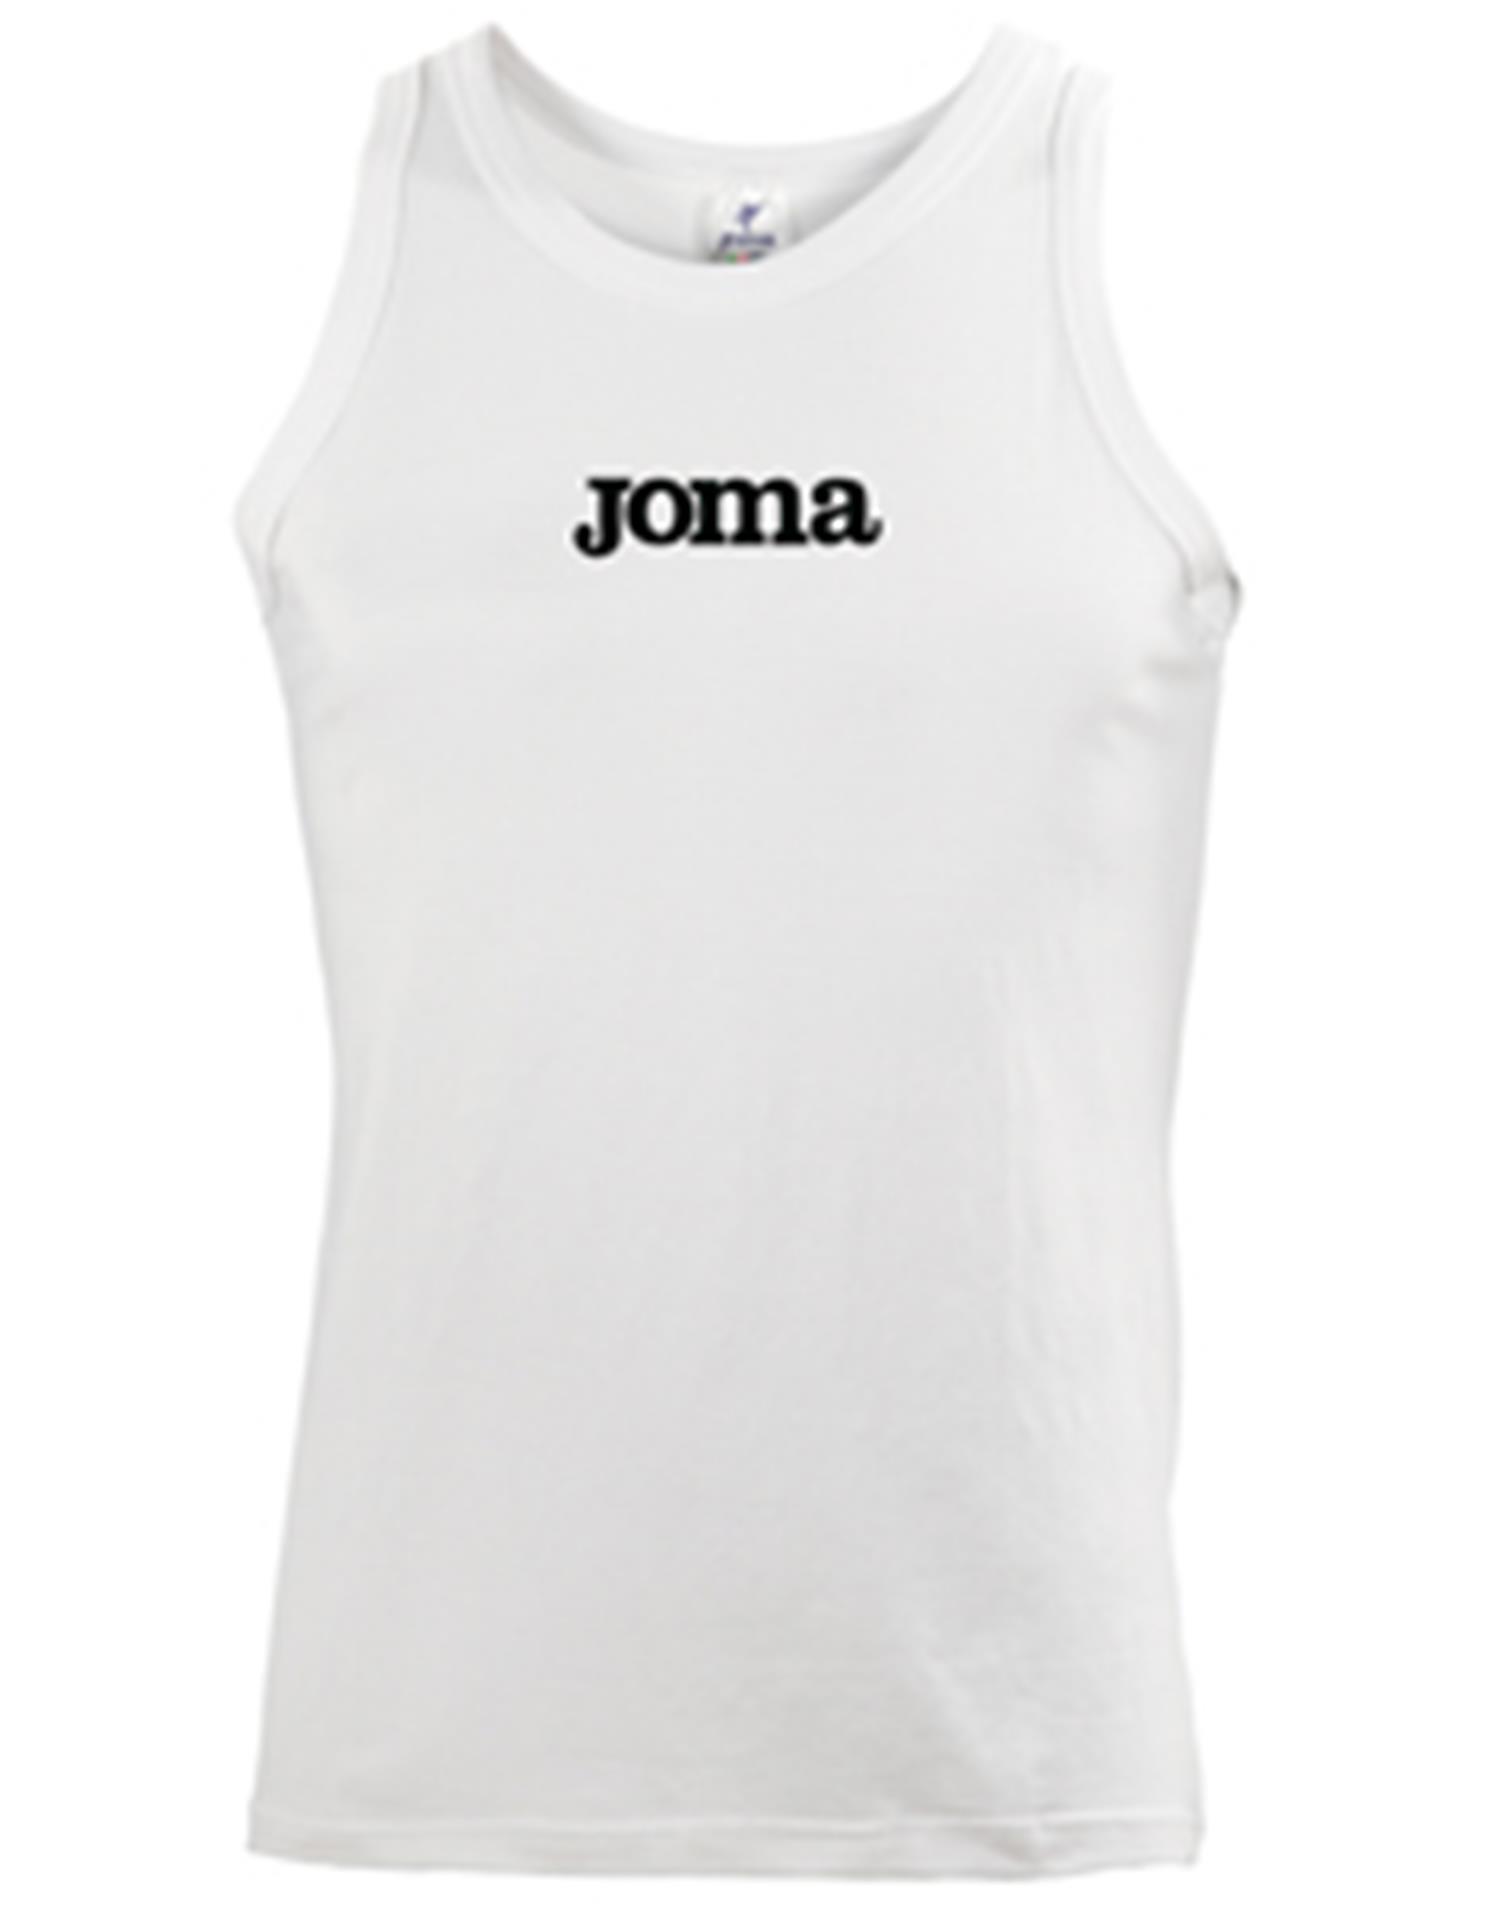 JOMA T-shirt smanicata bia